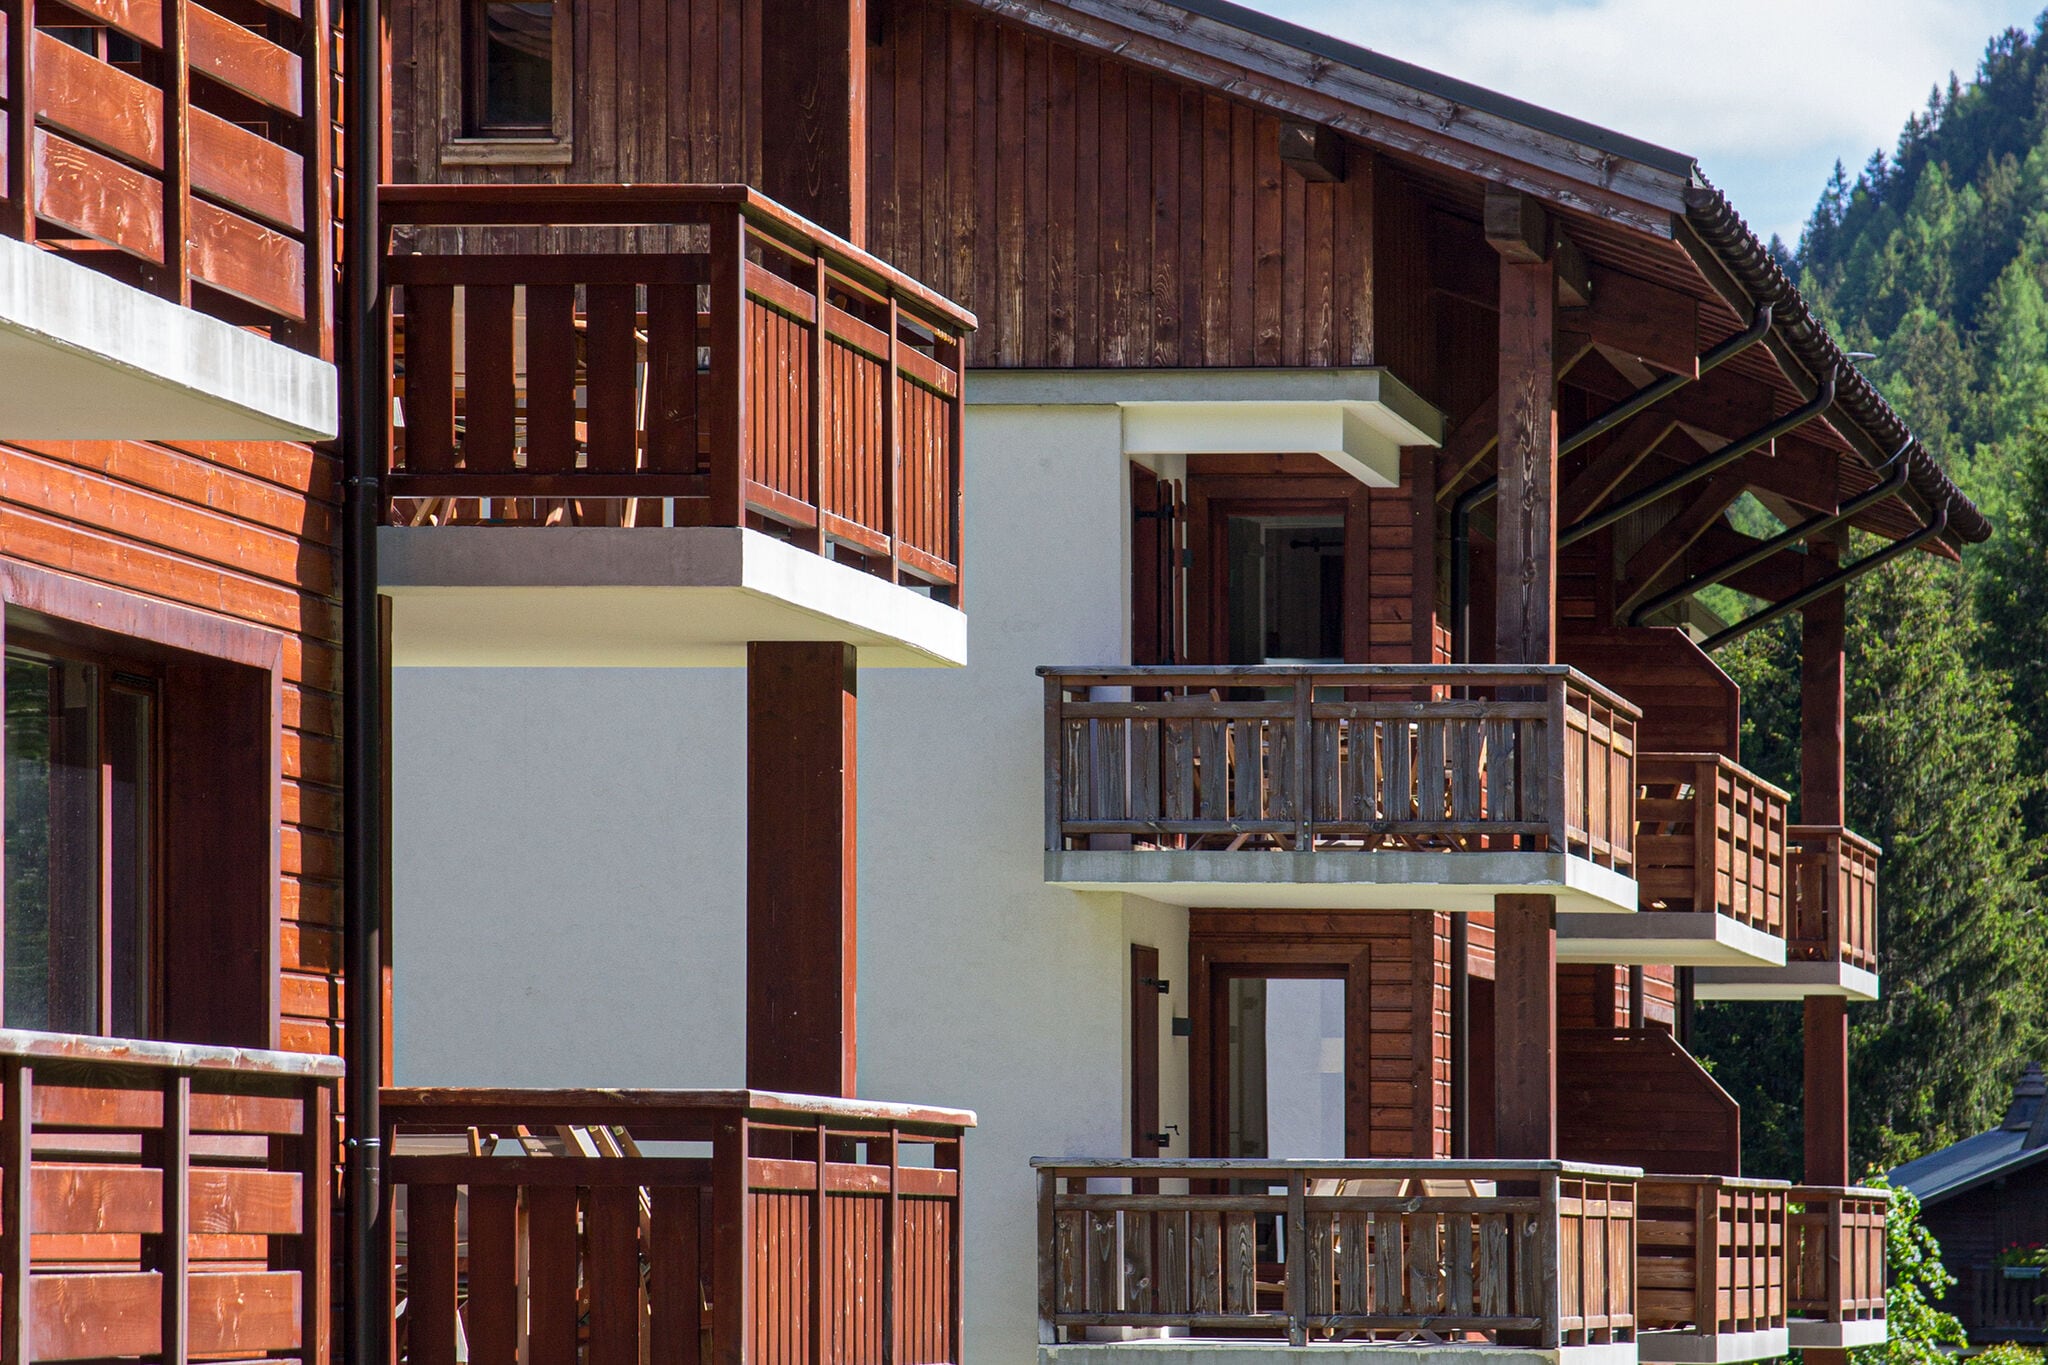 Modern apartment located in an authentic Savoyard mountain village